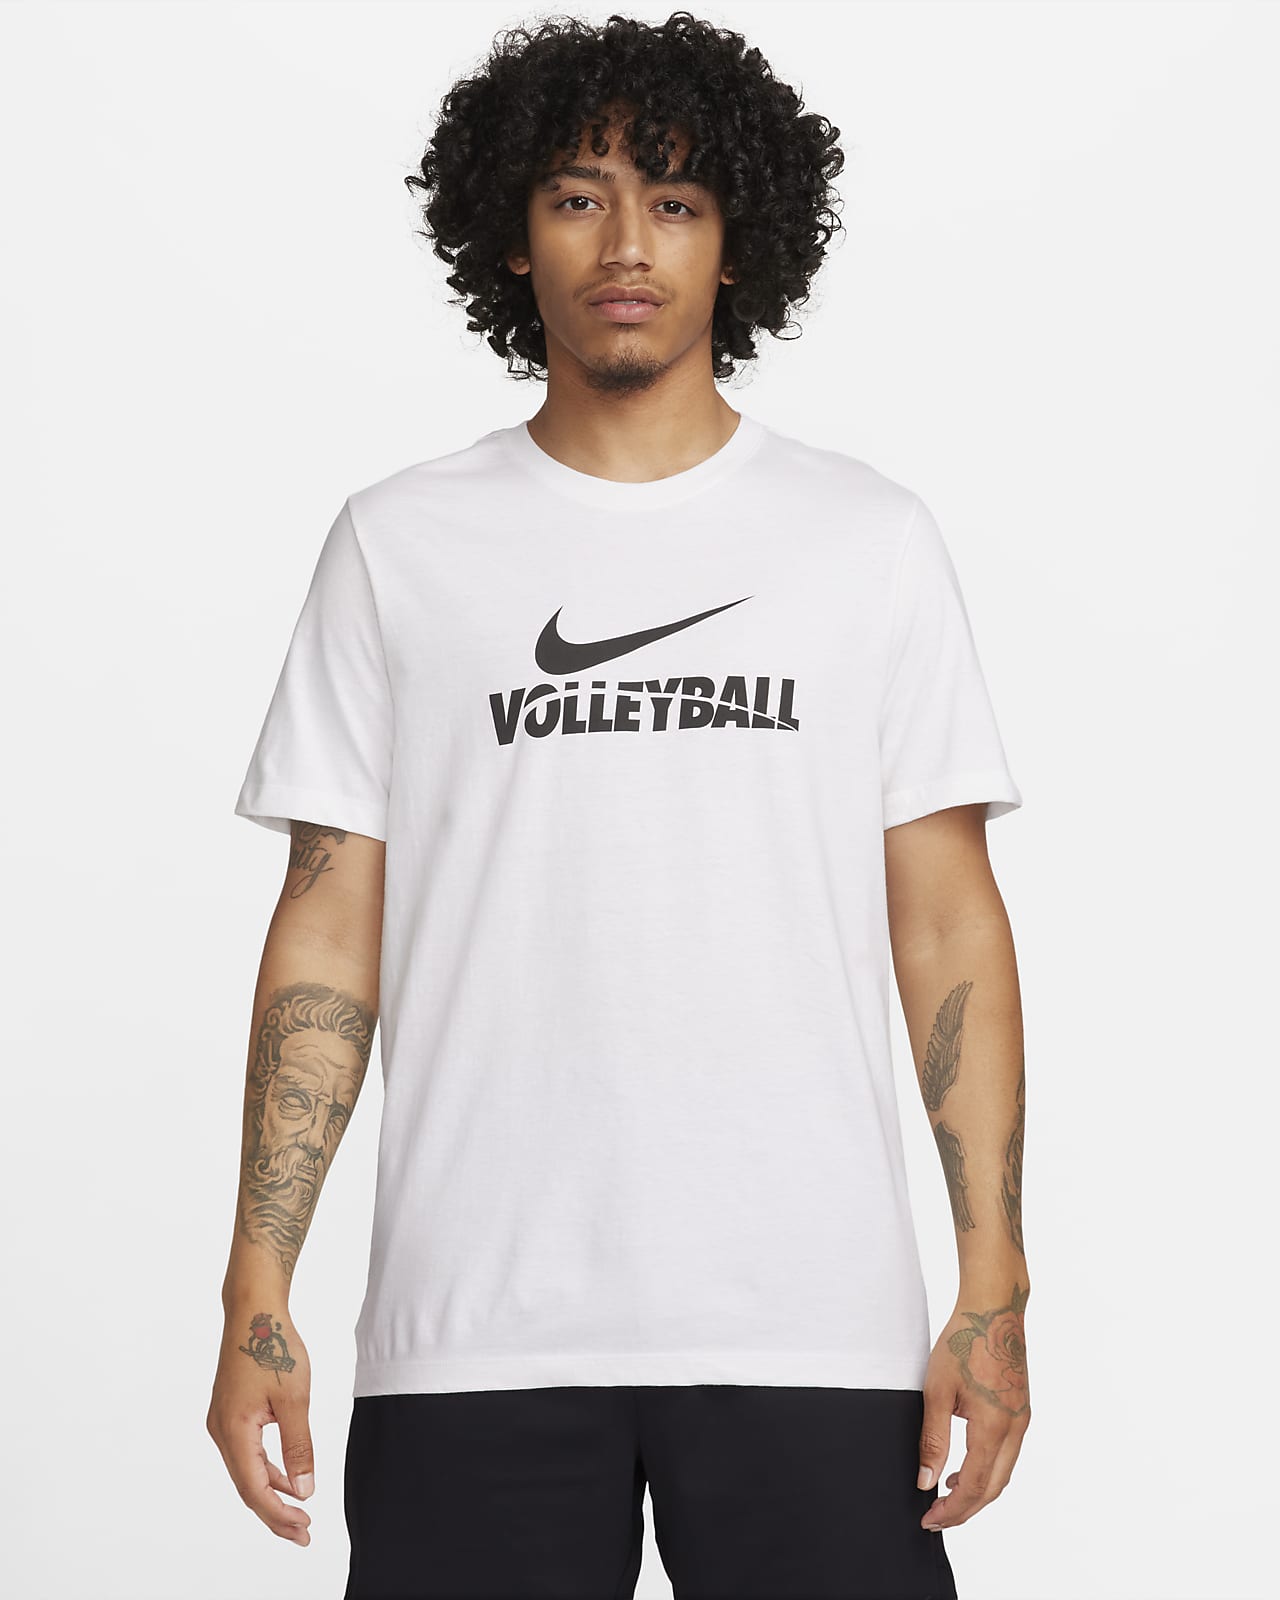 Volleyball Men's T-Shirt. Nike.com